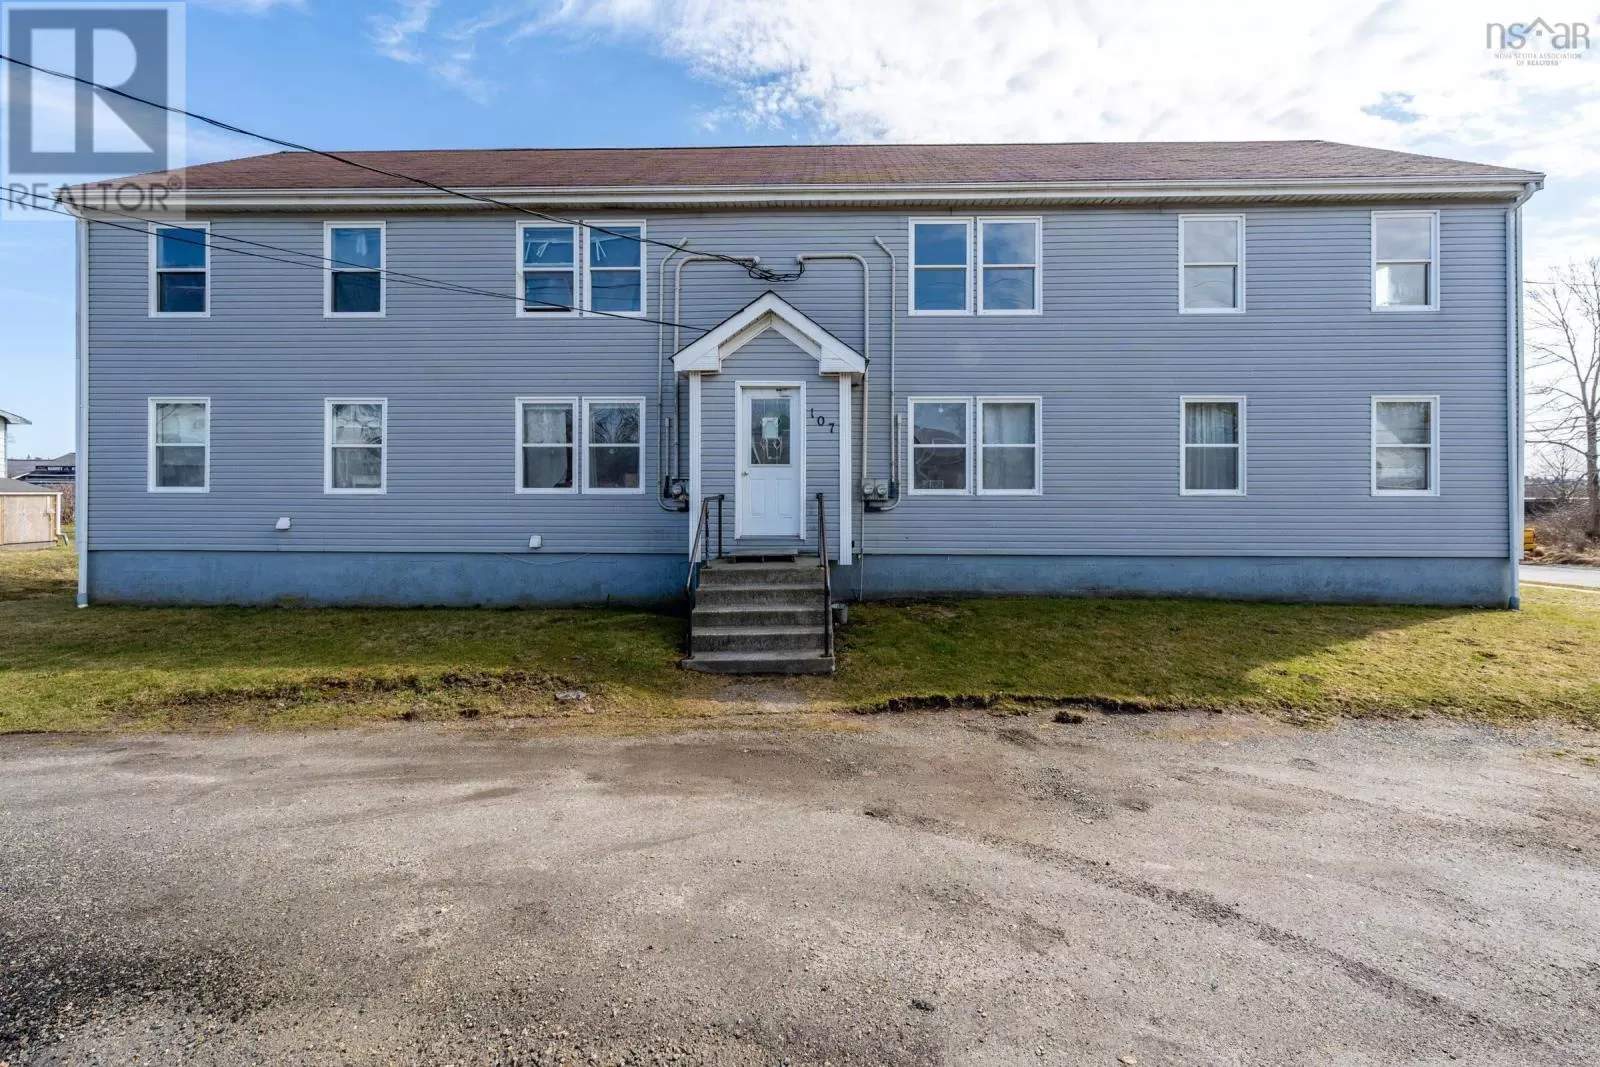 Fourplex for rent: 107 Pleasant Street, Yarmouth, Nova Scotia B5A 2J5